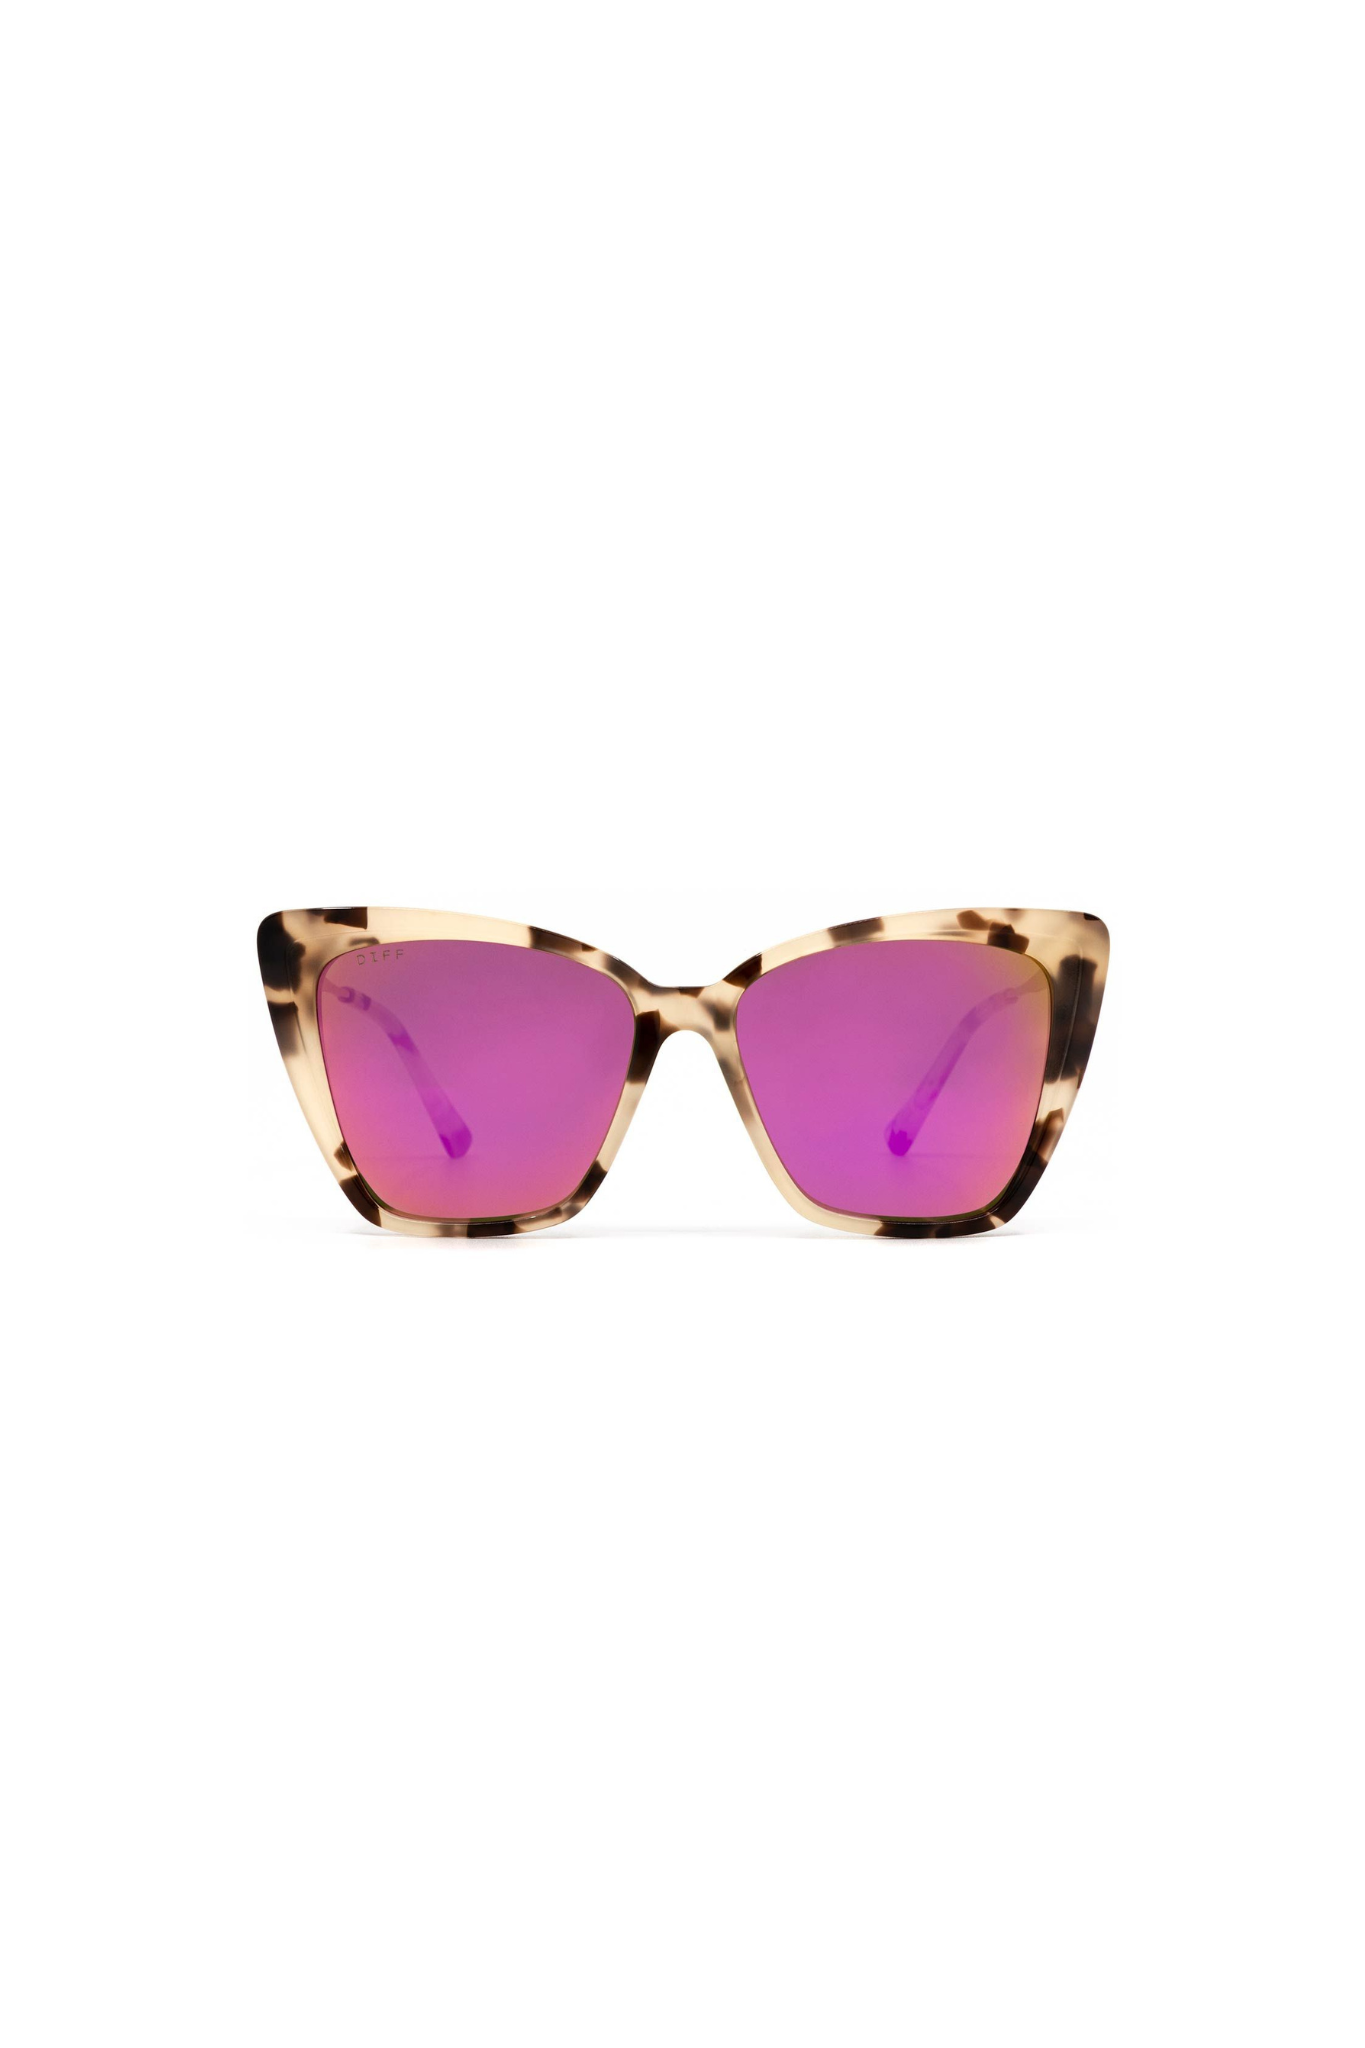 DIFF | Becky II Sunglasses - Cream Tortoise | Sweetest Stitch RVA